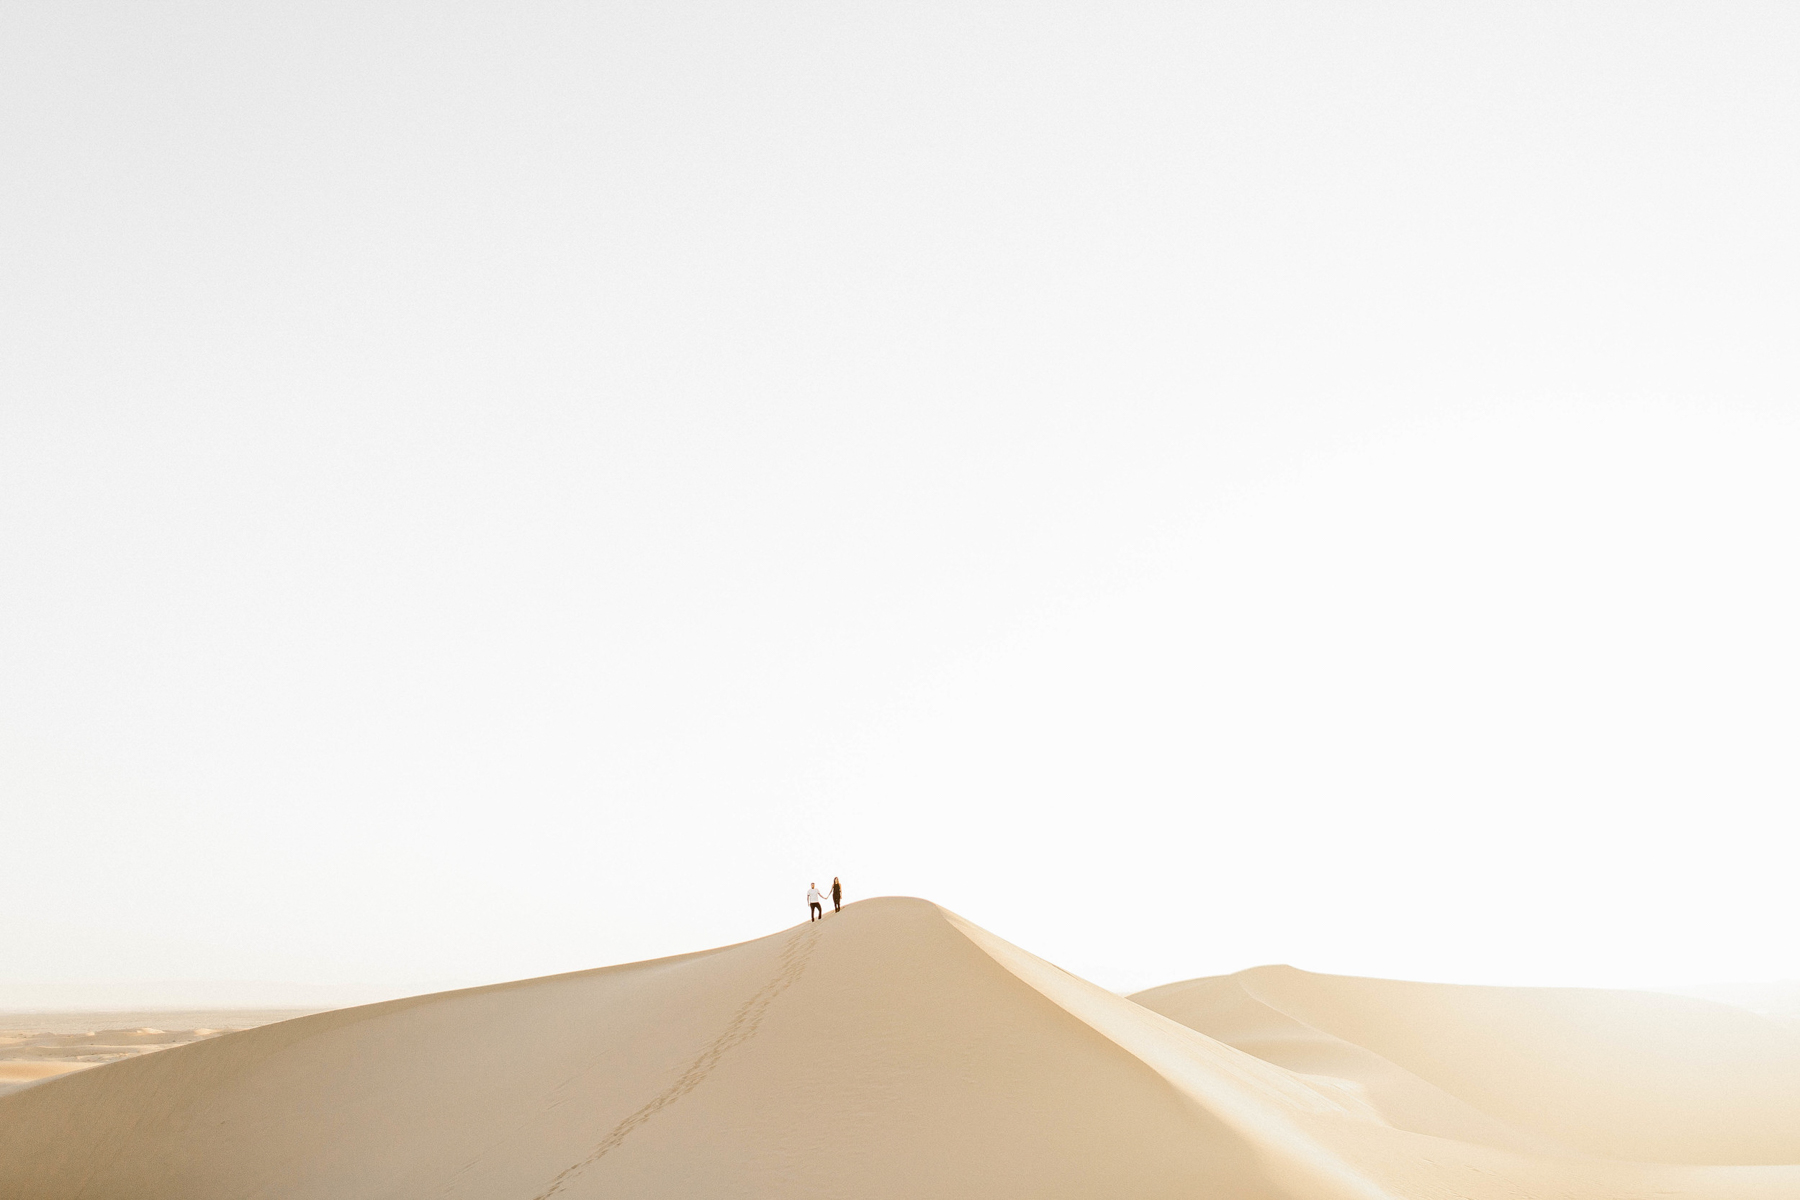 Algodones Sand Dunes Film Engagement Photography